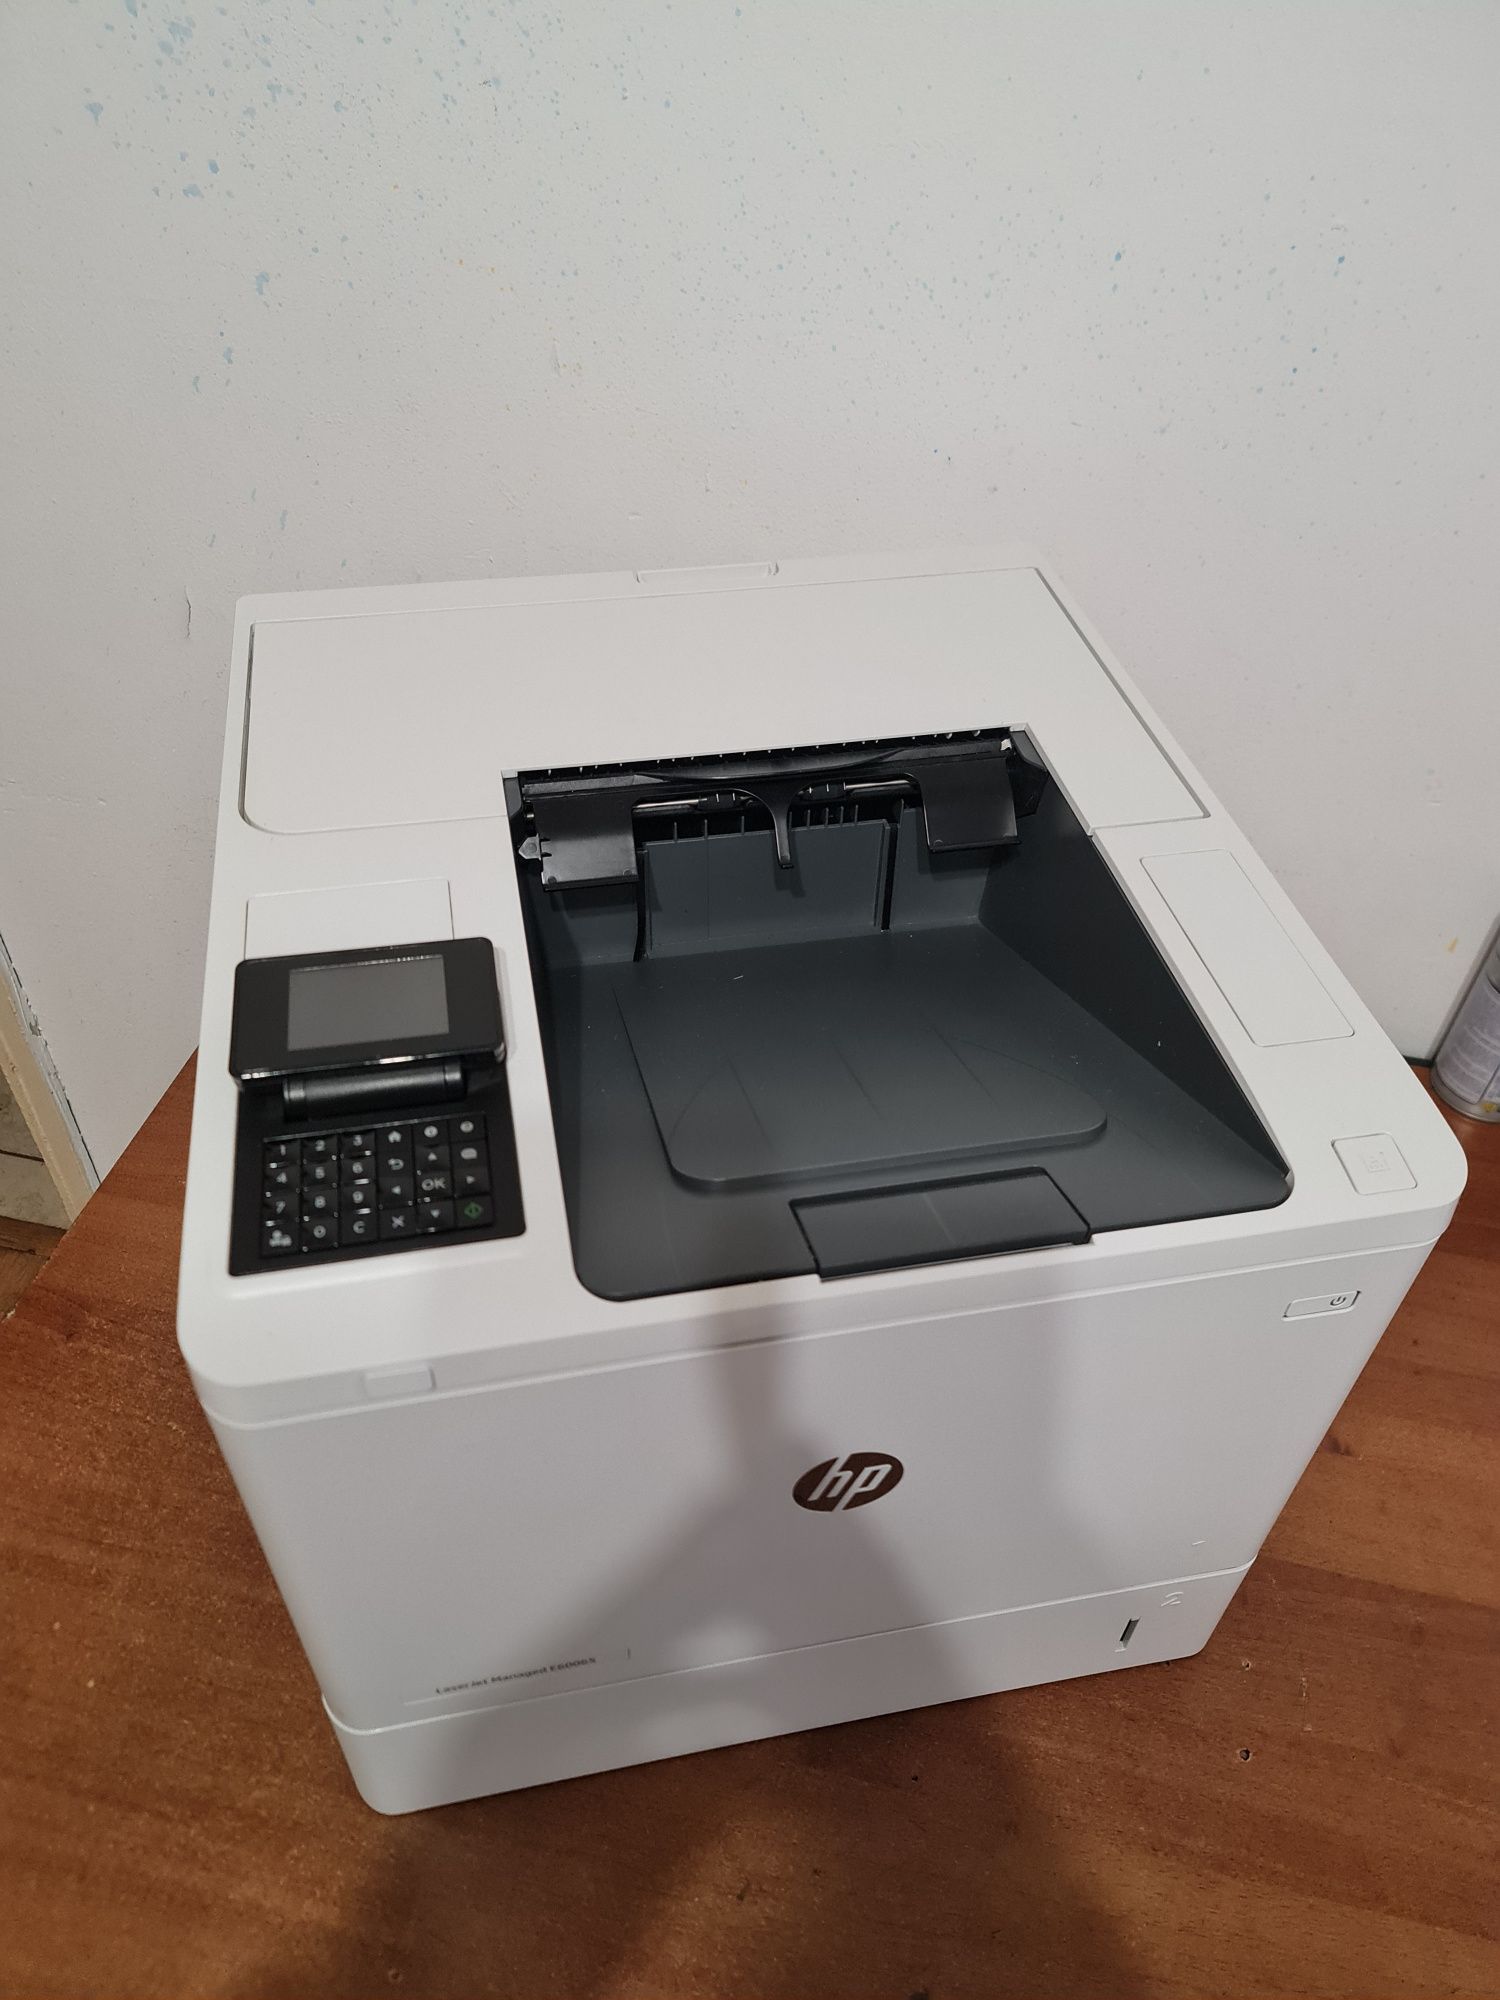 Imprimanta laser HP E60065